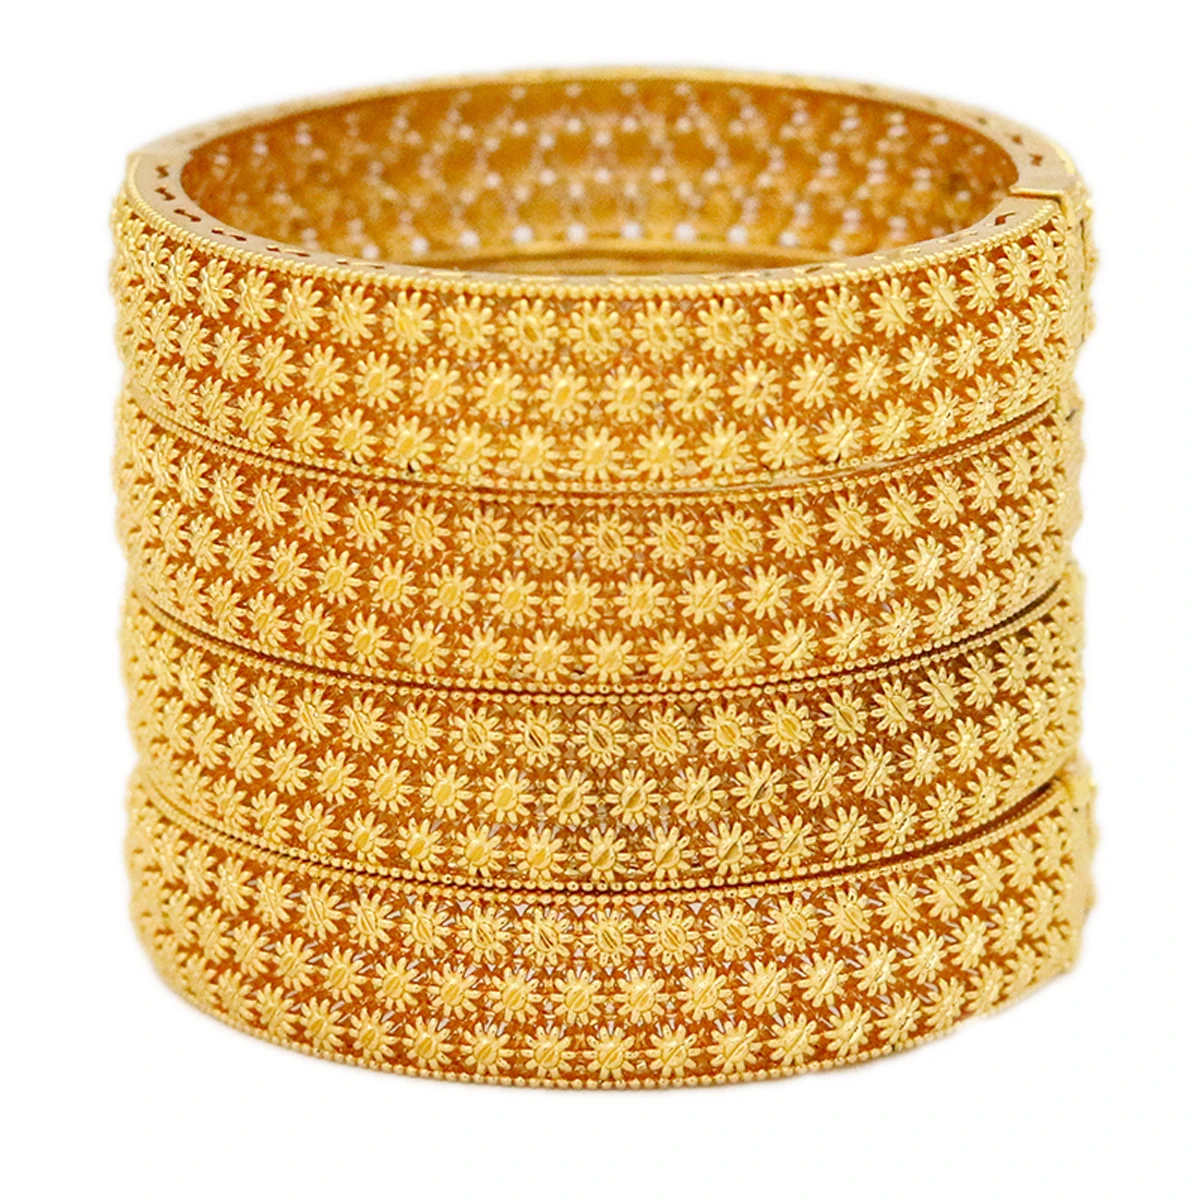 

24k Ethiopian Bracelet Women's Luxury Dubai Wedding Jewelry Africa India Arab Jewelry Gold Charm Party Wedding Gift